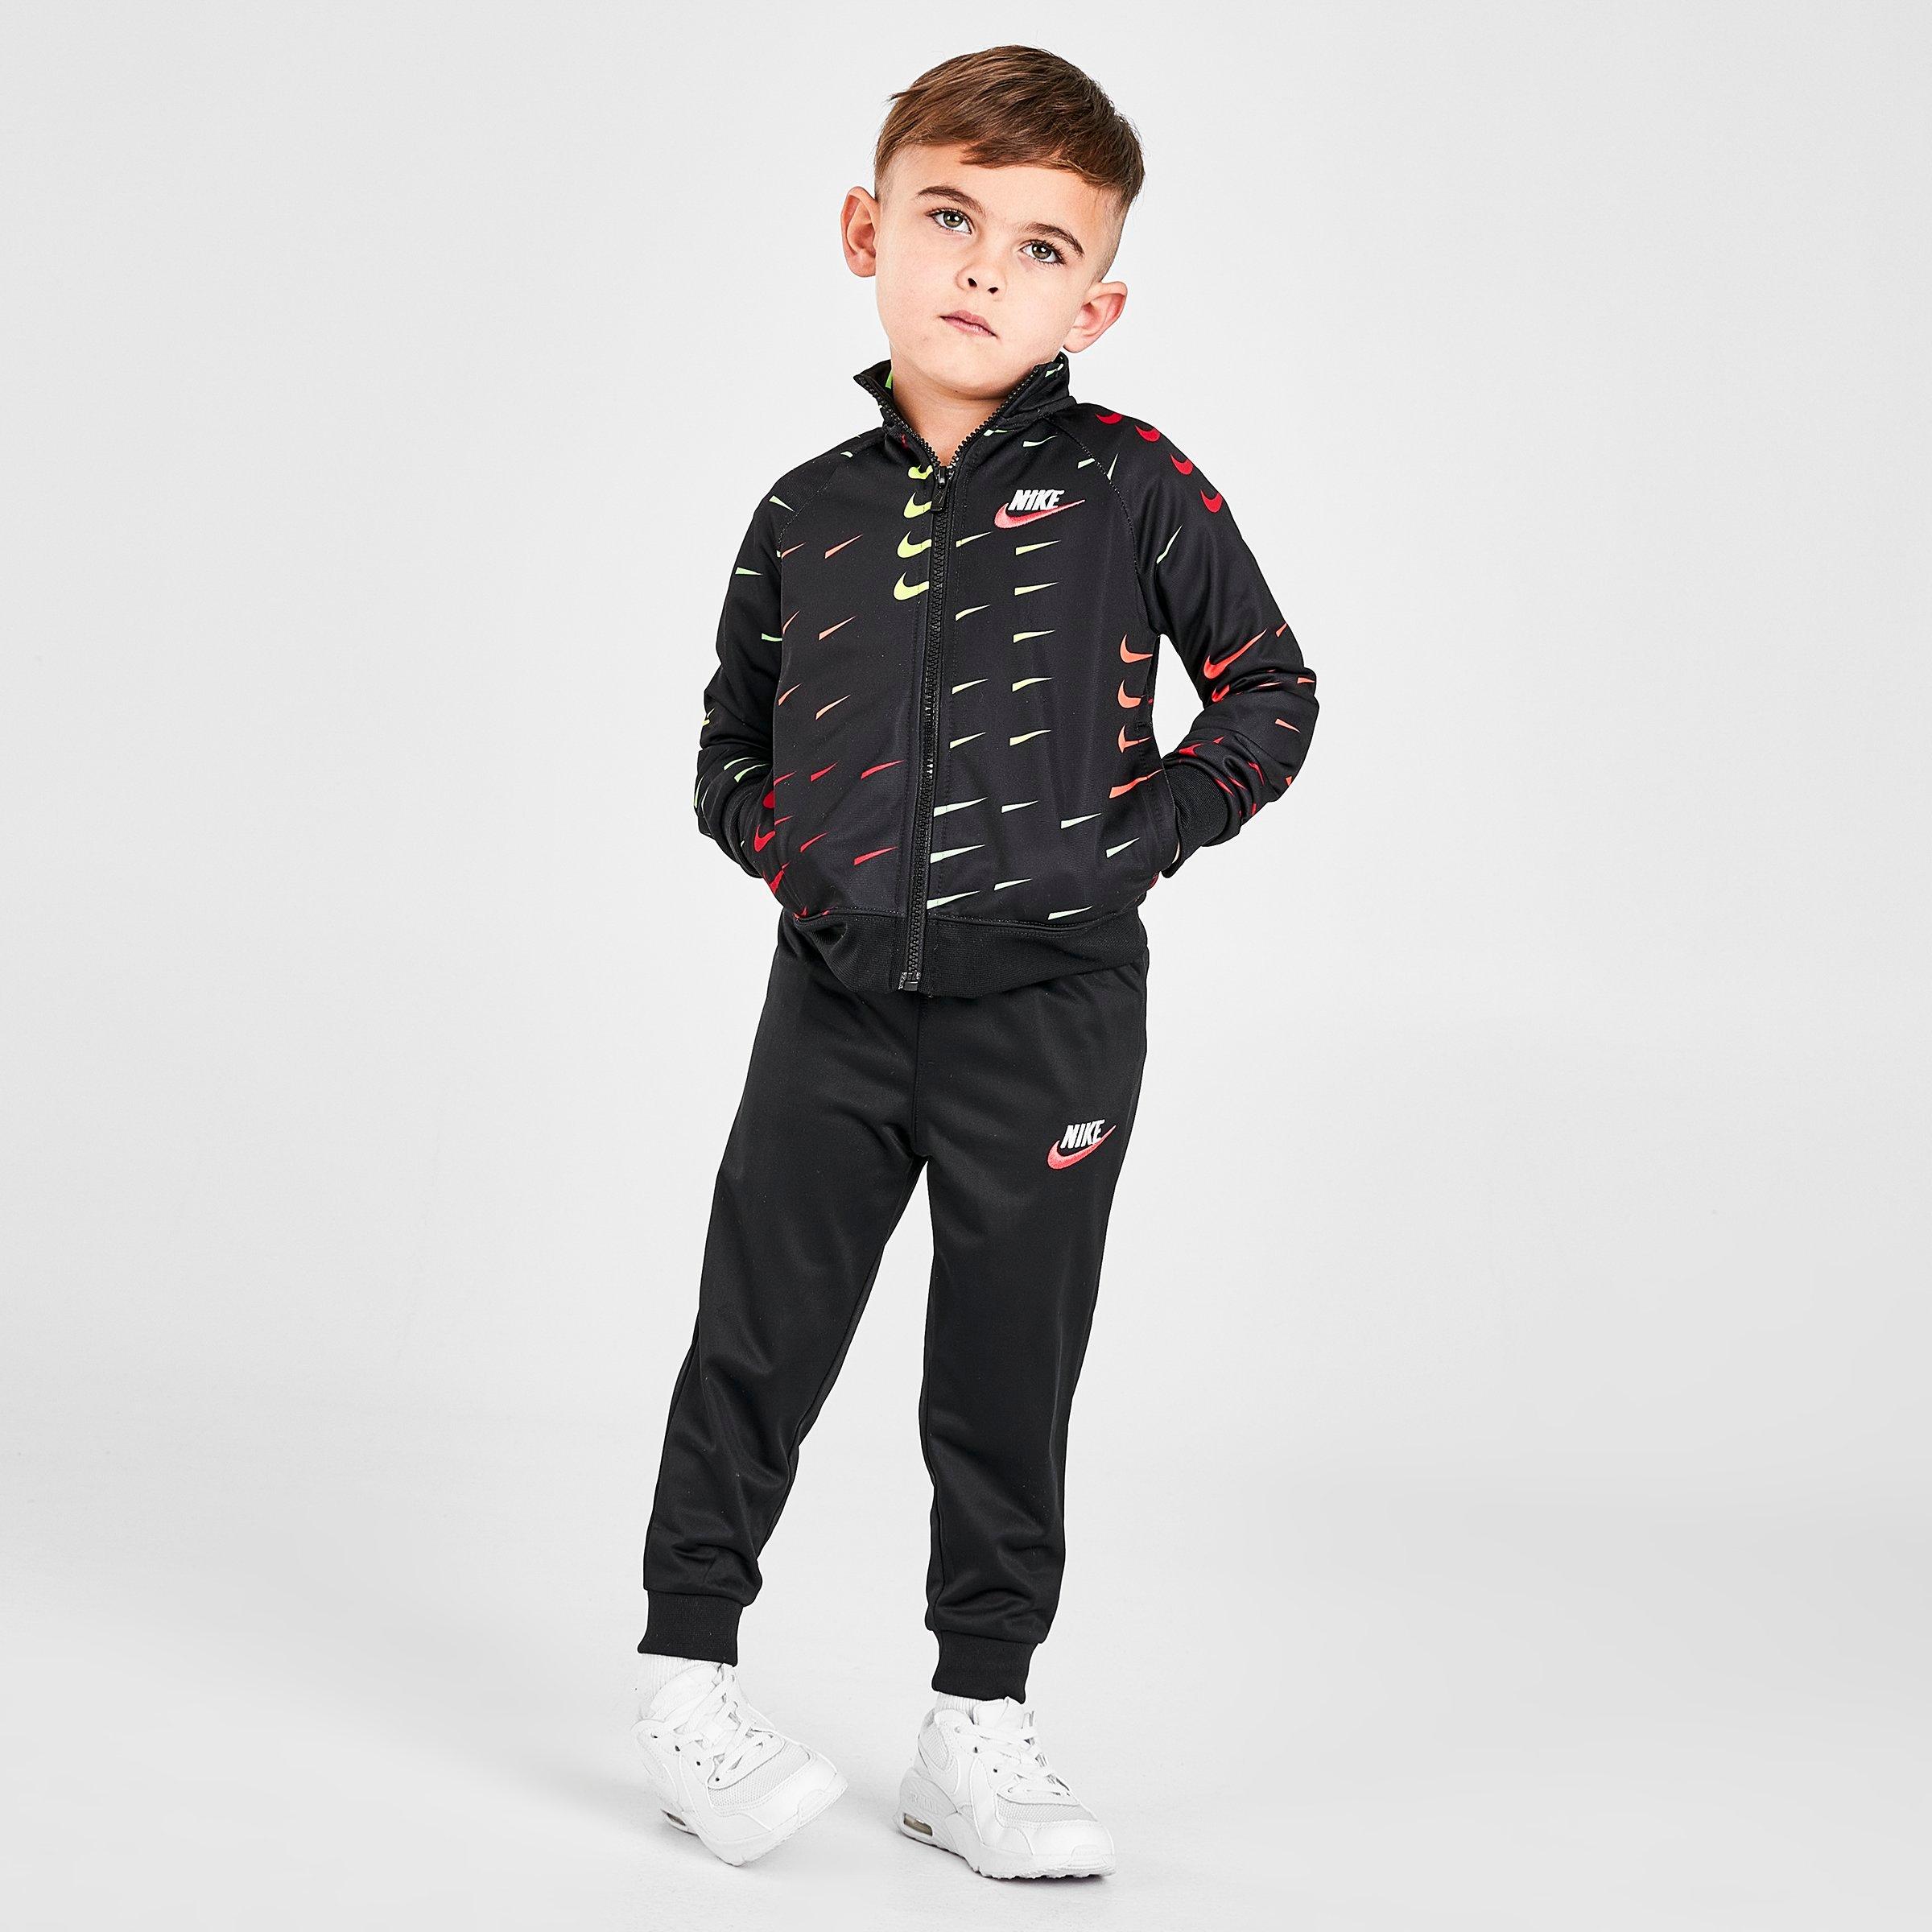 Boys' Toddler Nike Swoosh Track Suit 